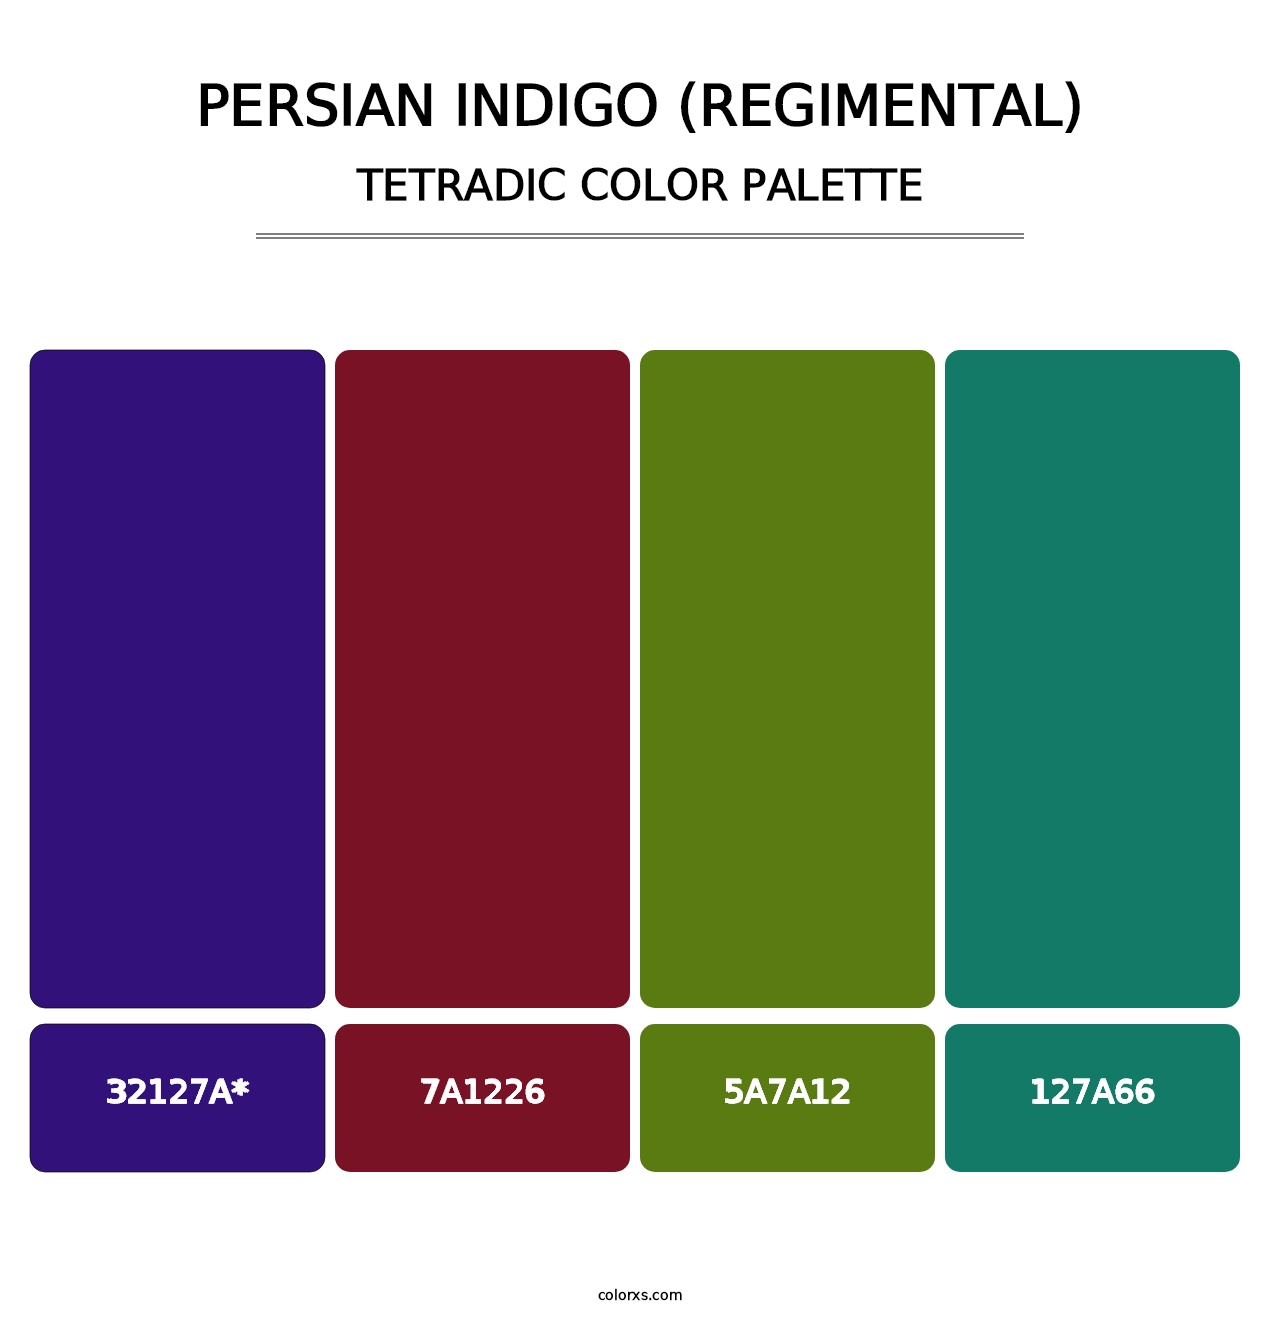 Persian Indigo (Regimental) - Tetradic Color Palette